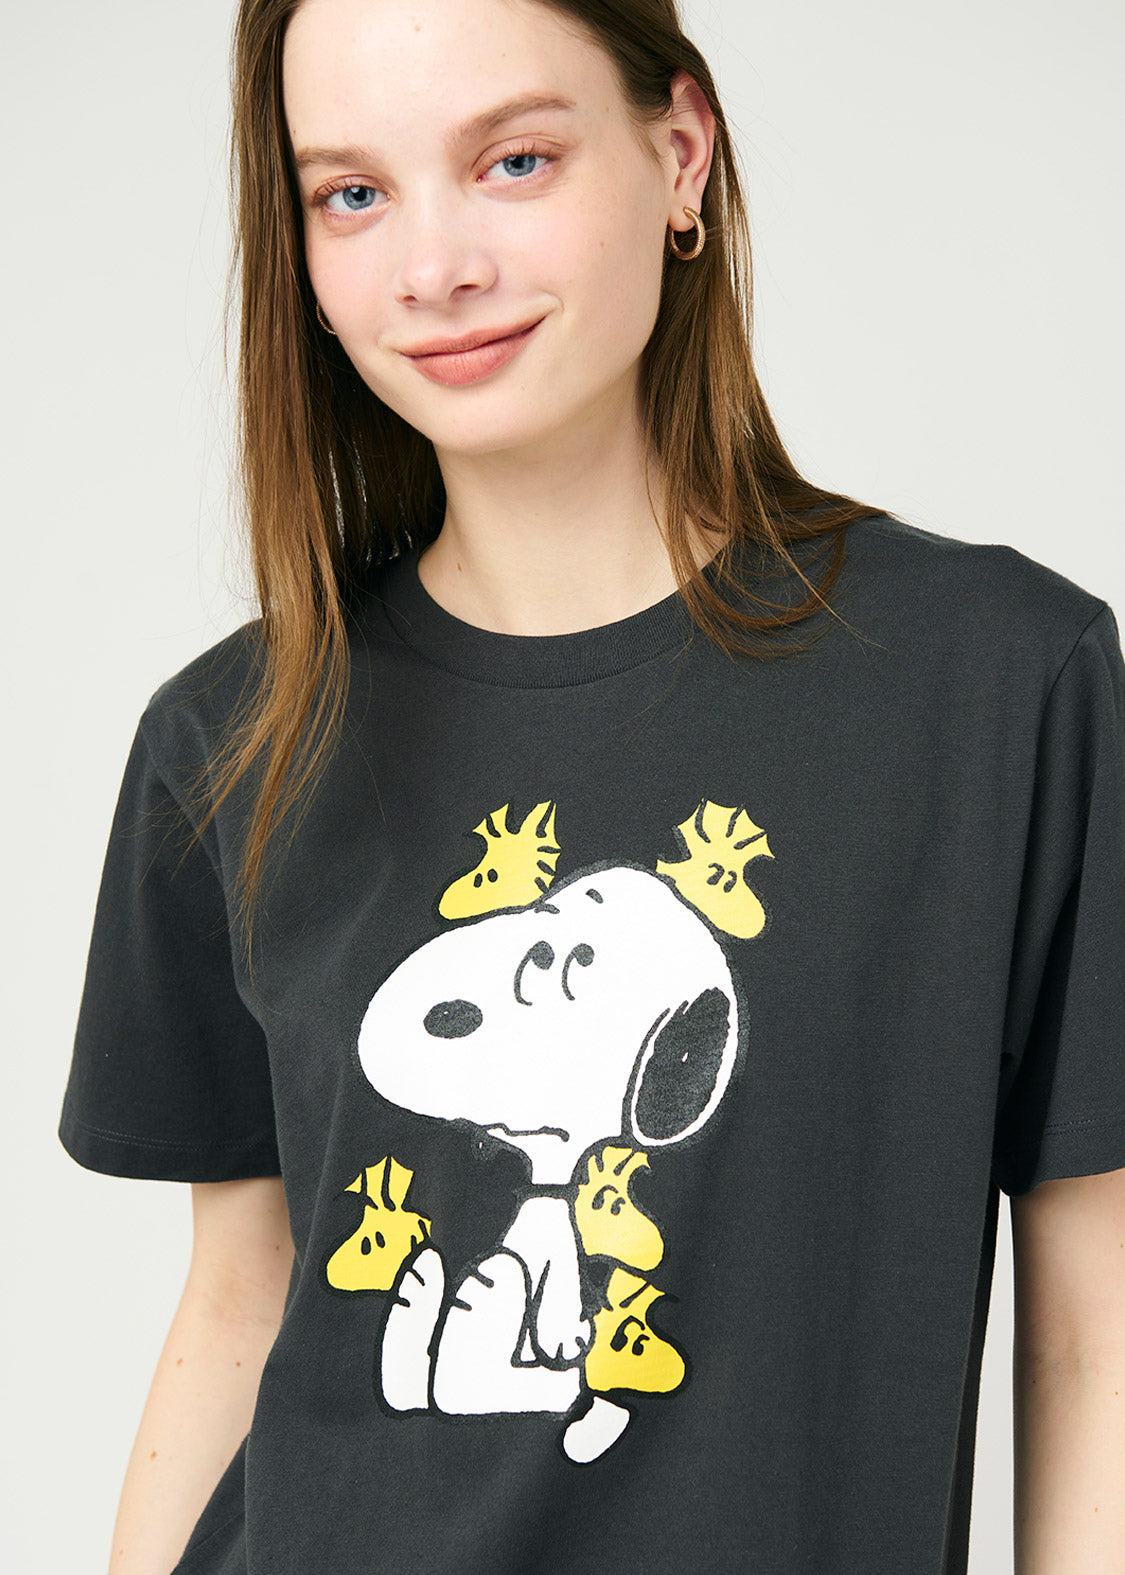 Peanuts_Snoopy and Woodstocks Friends 2